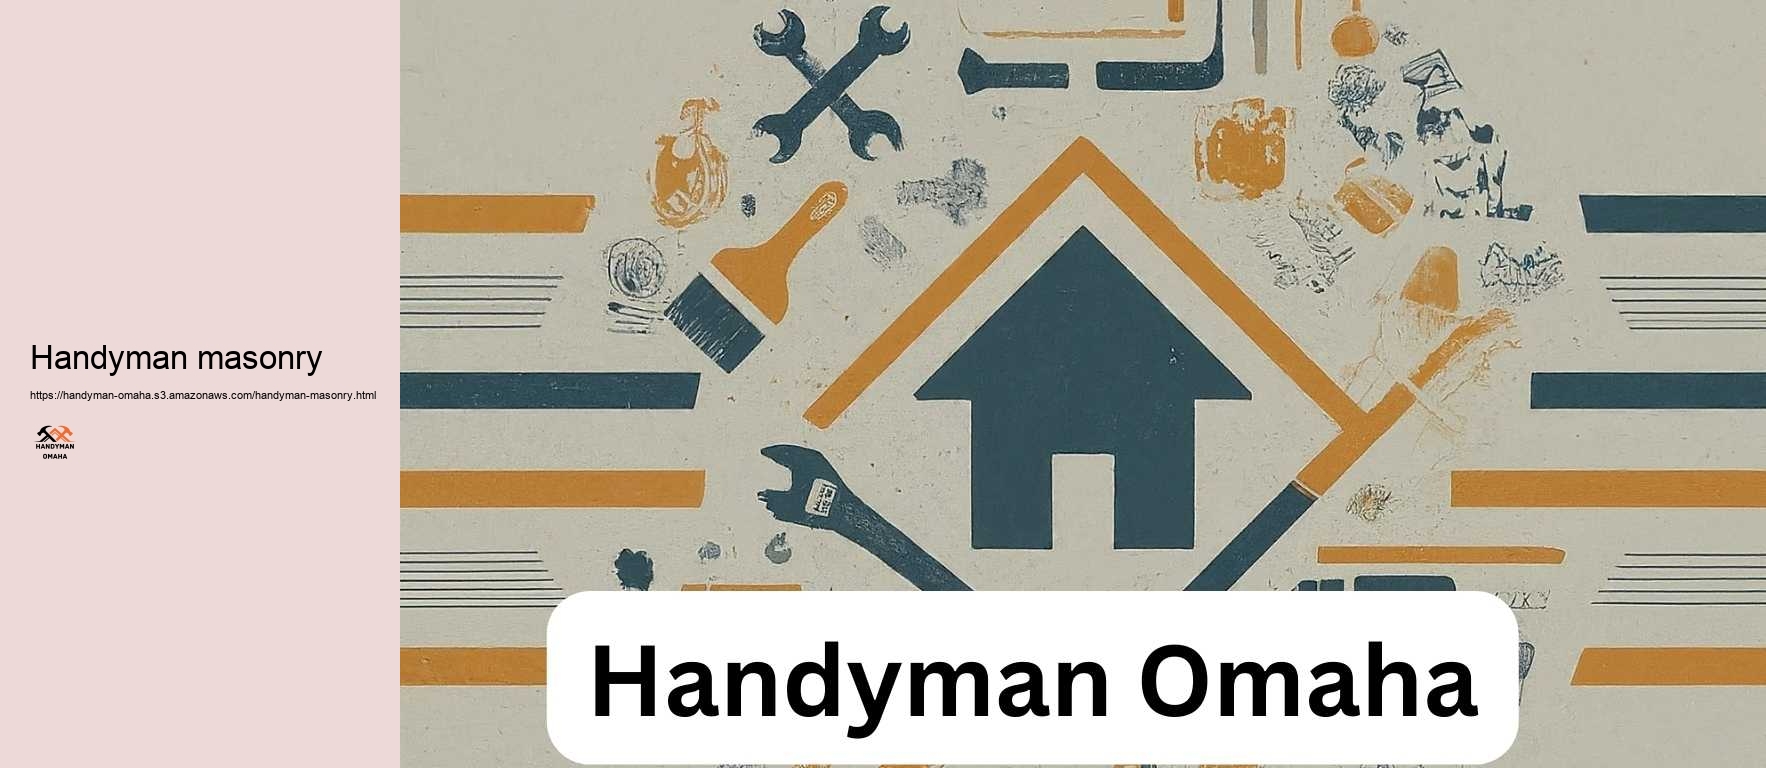 Handyman masonry